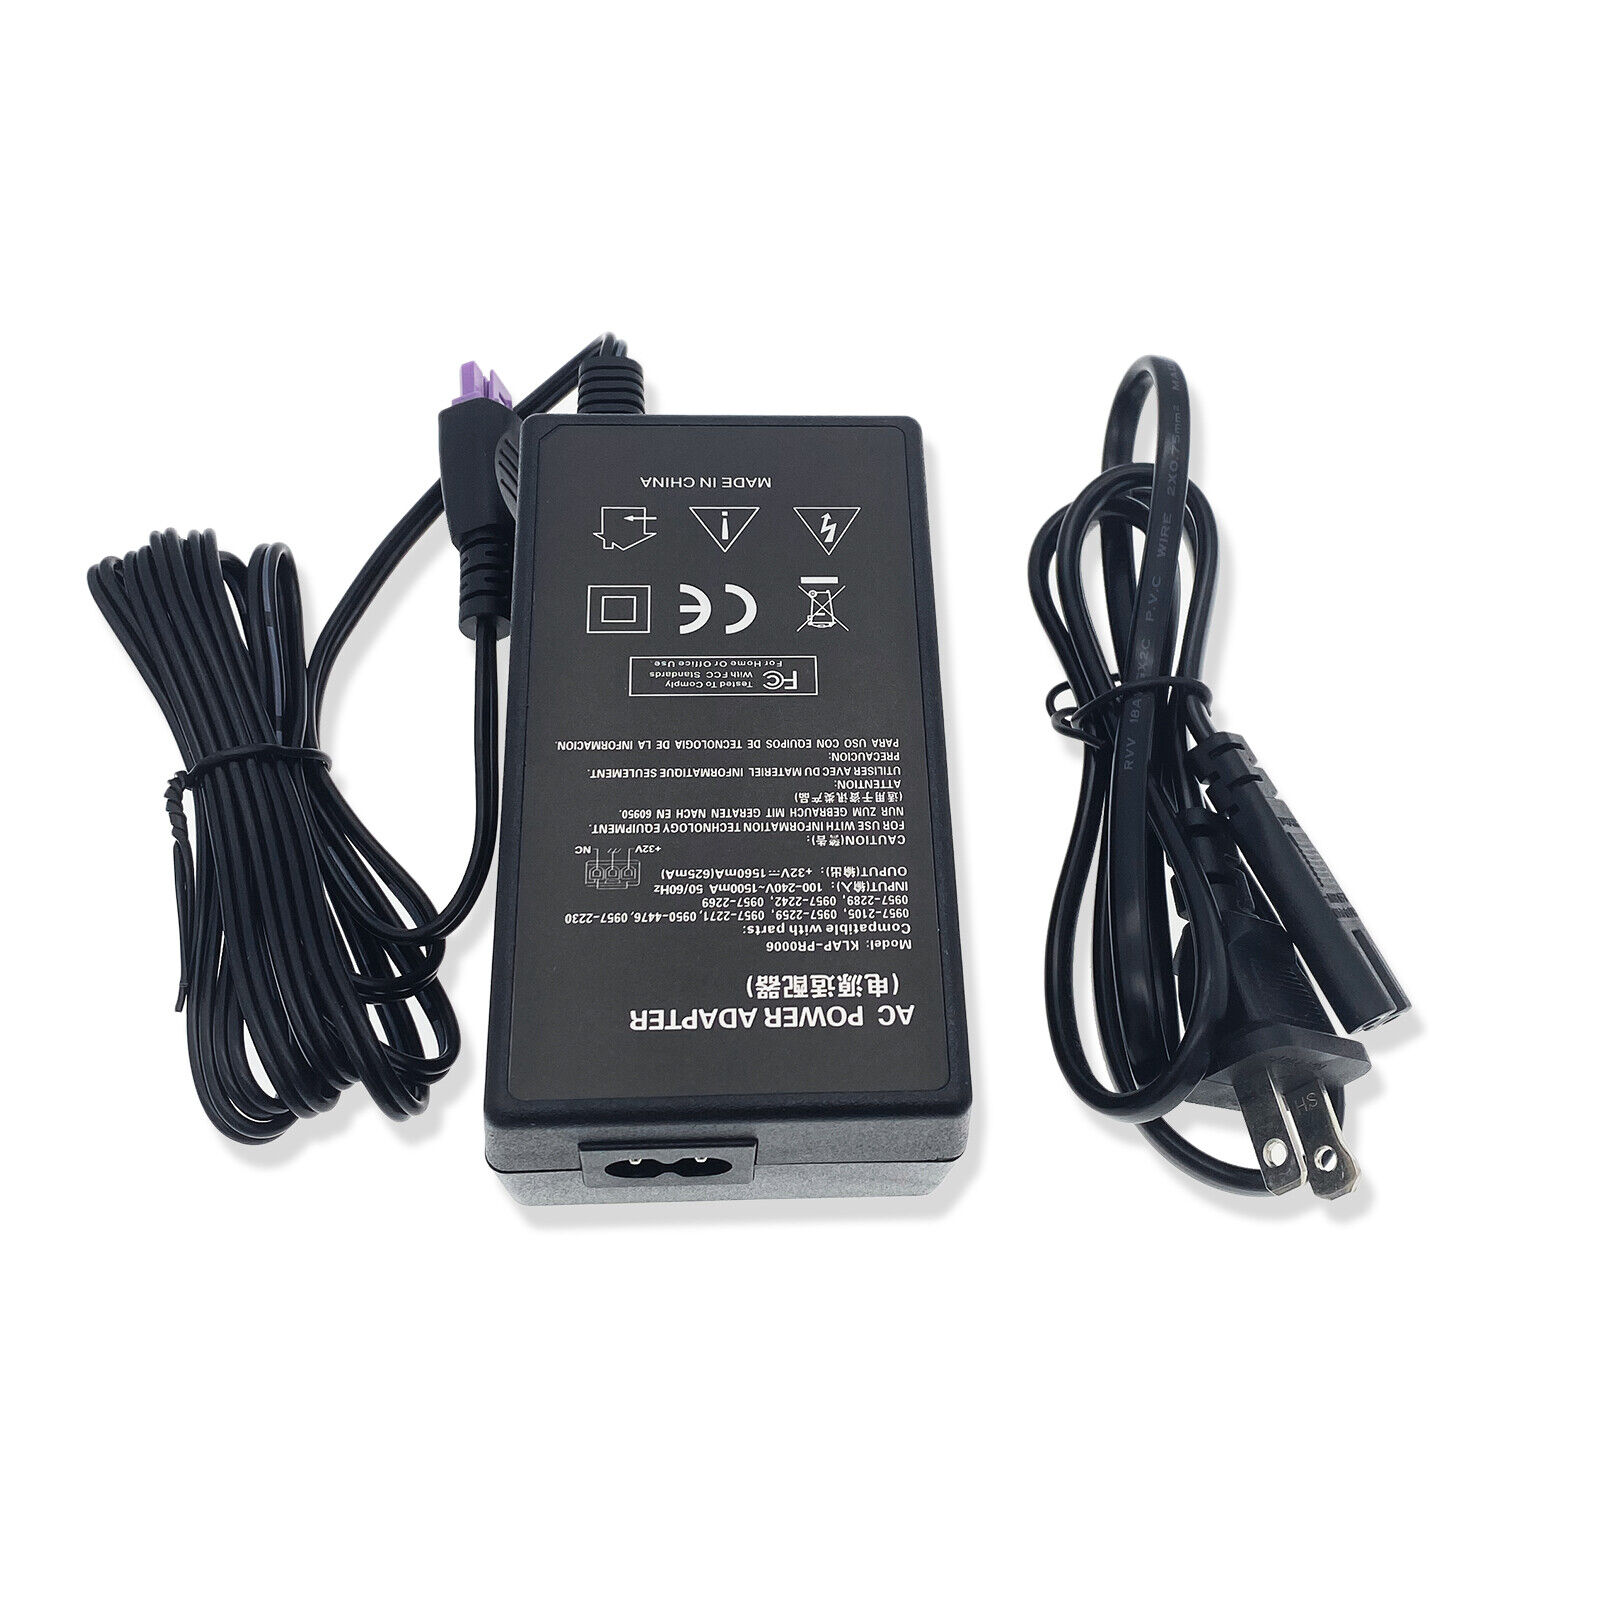 New For HP Photosmart C5180 C5183 C5185 C5188 C5190 AC Adapter Power Supply Cord